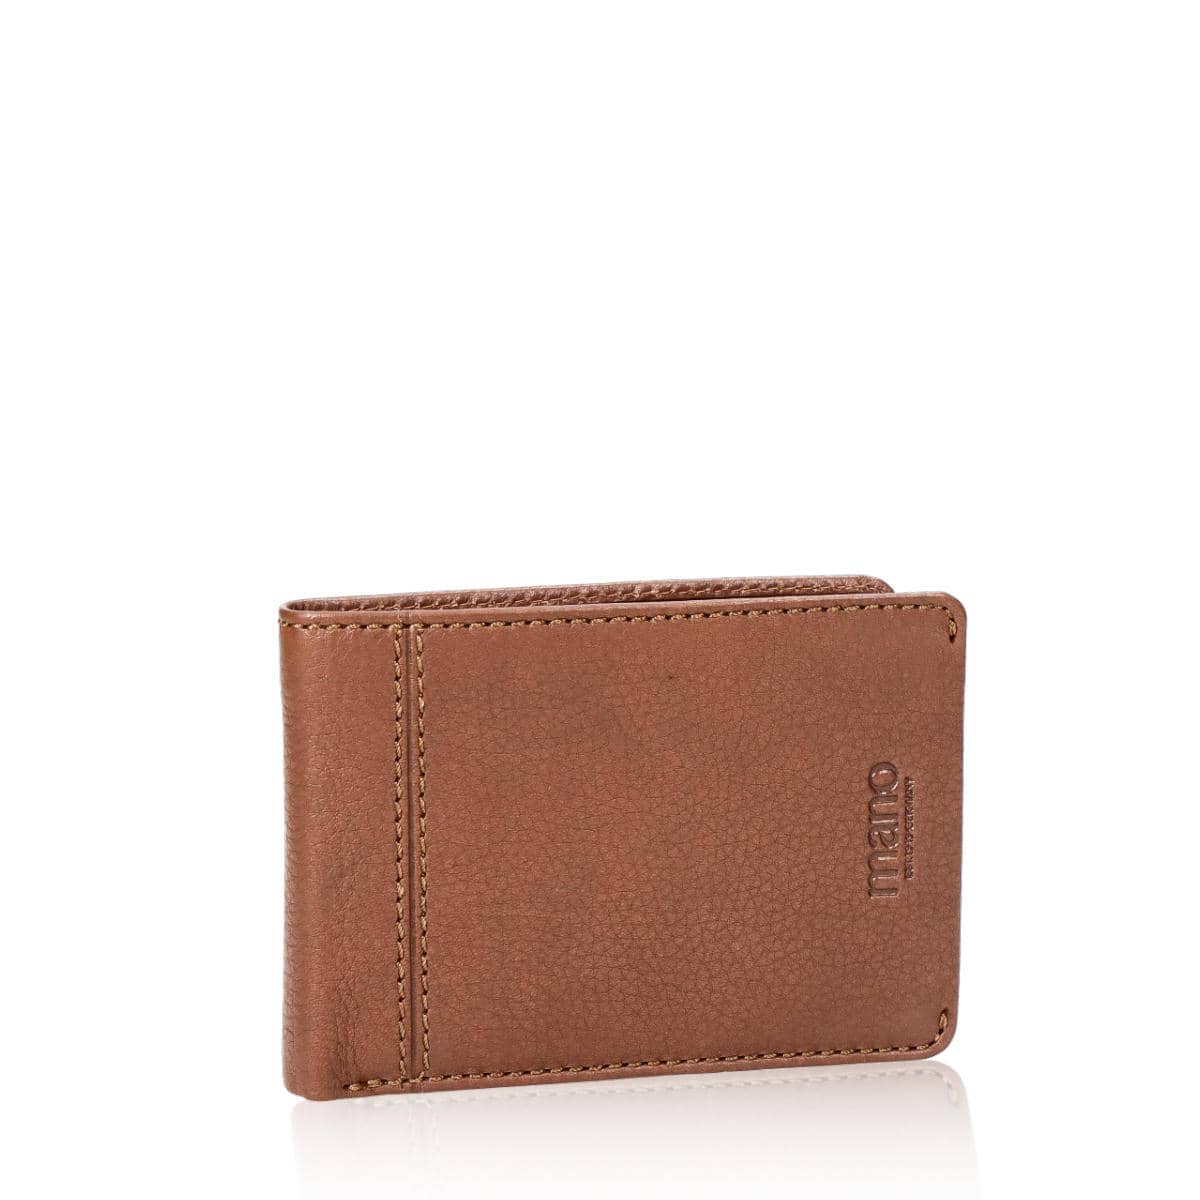 Leather Wallet - Brass zipper wallet with draft-8 logo. Men gift 👝